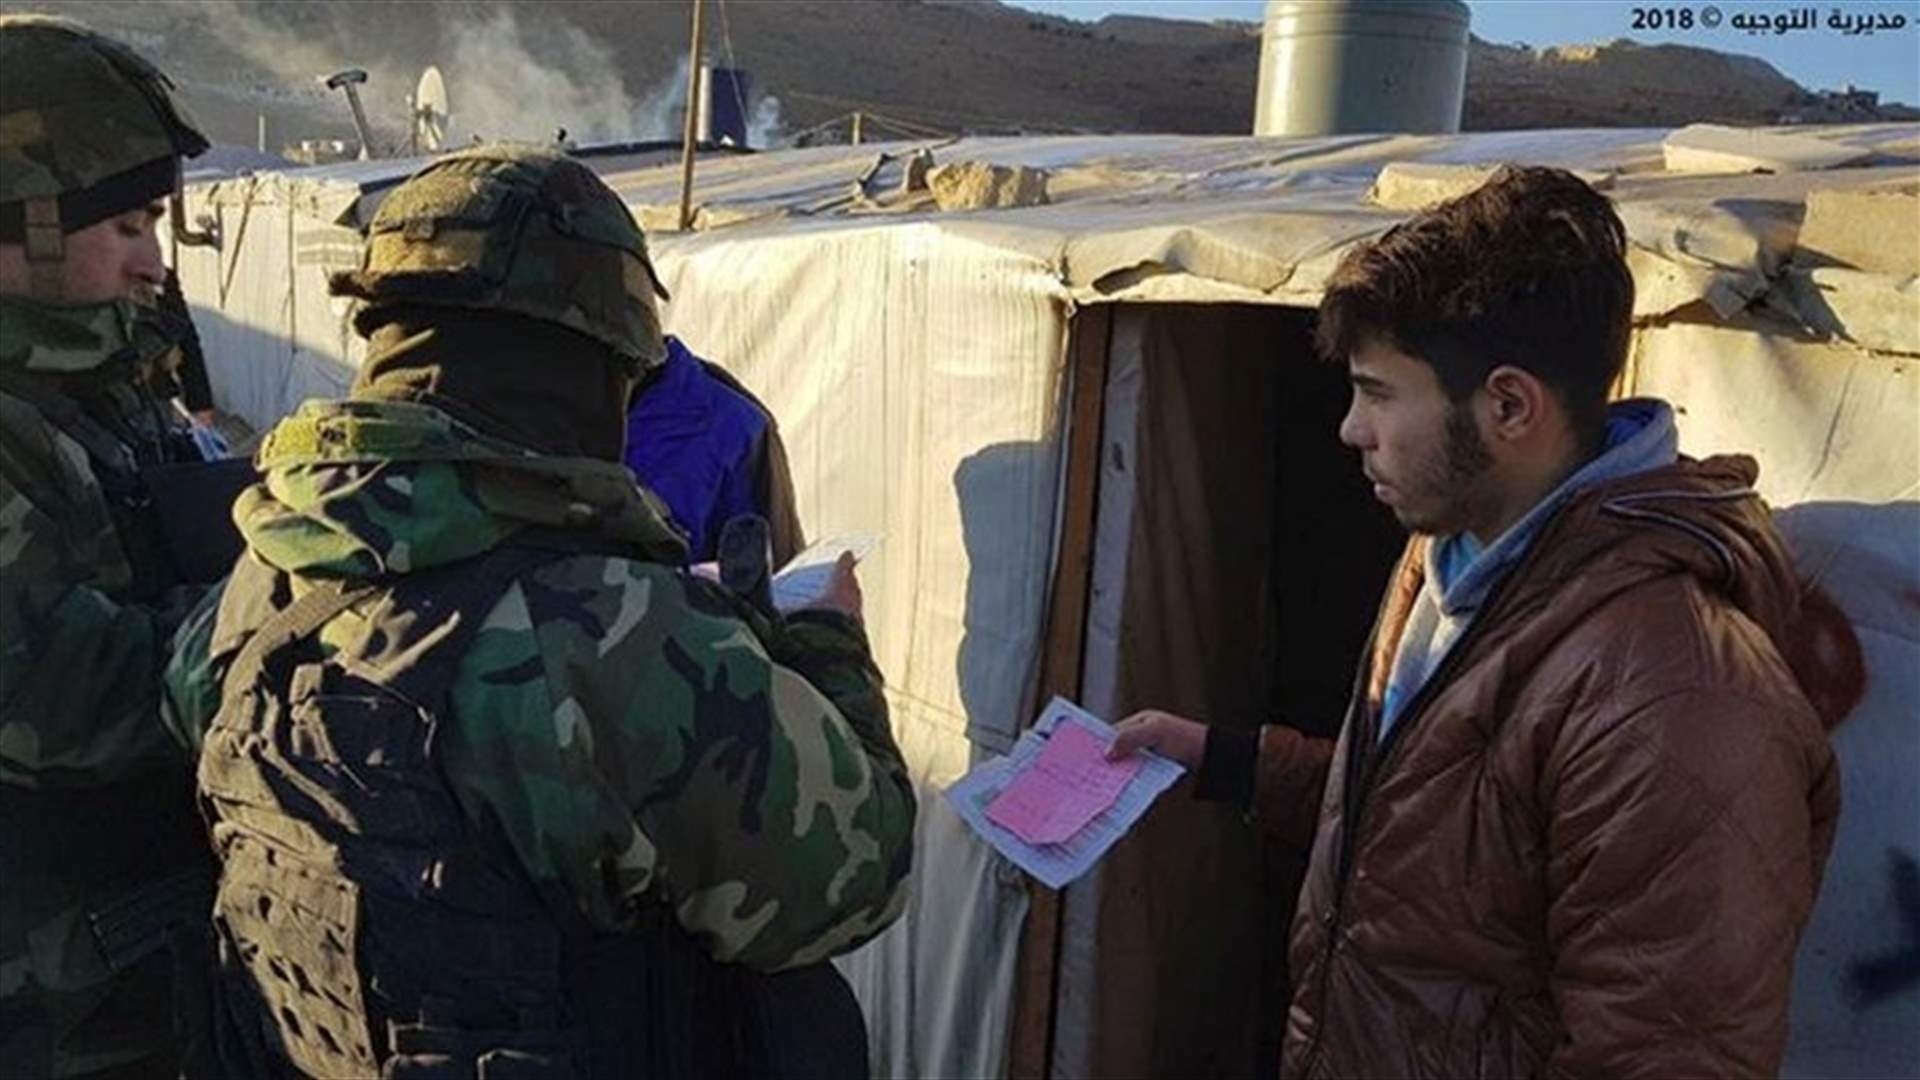 Refugee camps raided in Arsal, fugitives arrested